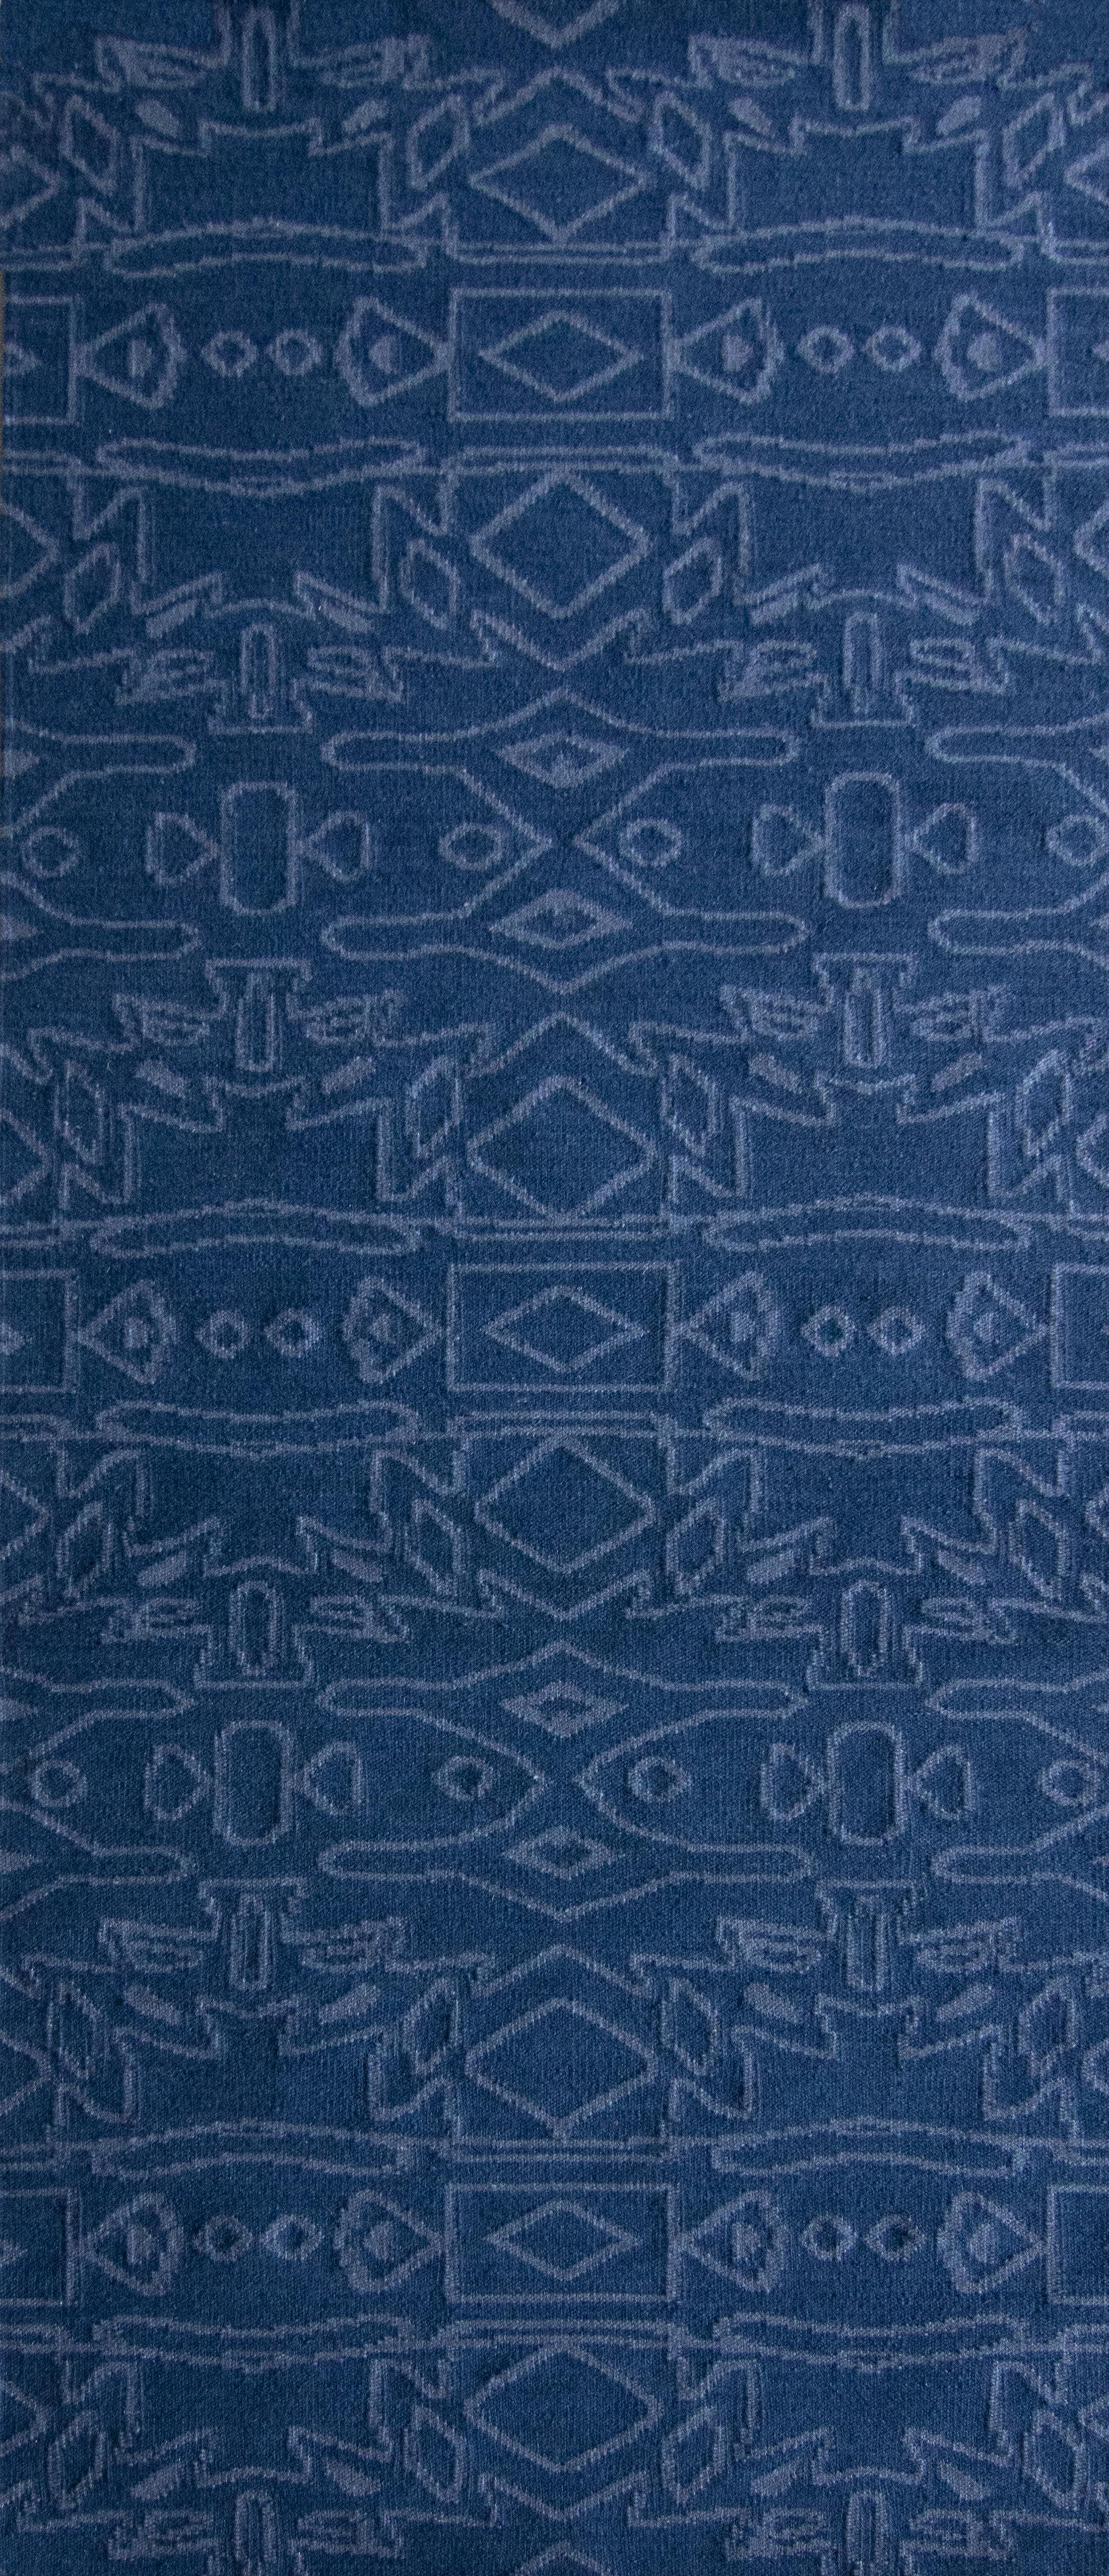 Rug Pattern: Akimbo - Indigo
Material: 100% Organic Cotton
Quality: Flat-weave, handwoven 
Size: 8'-0